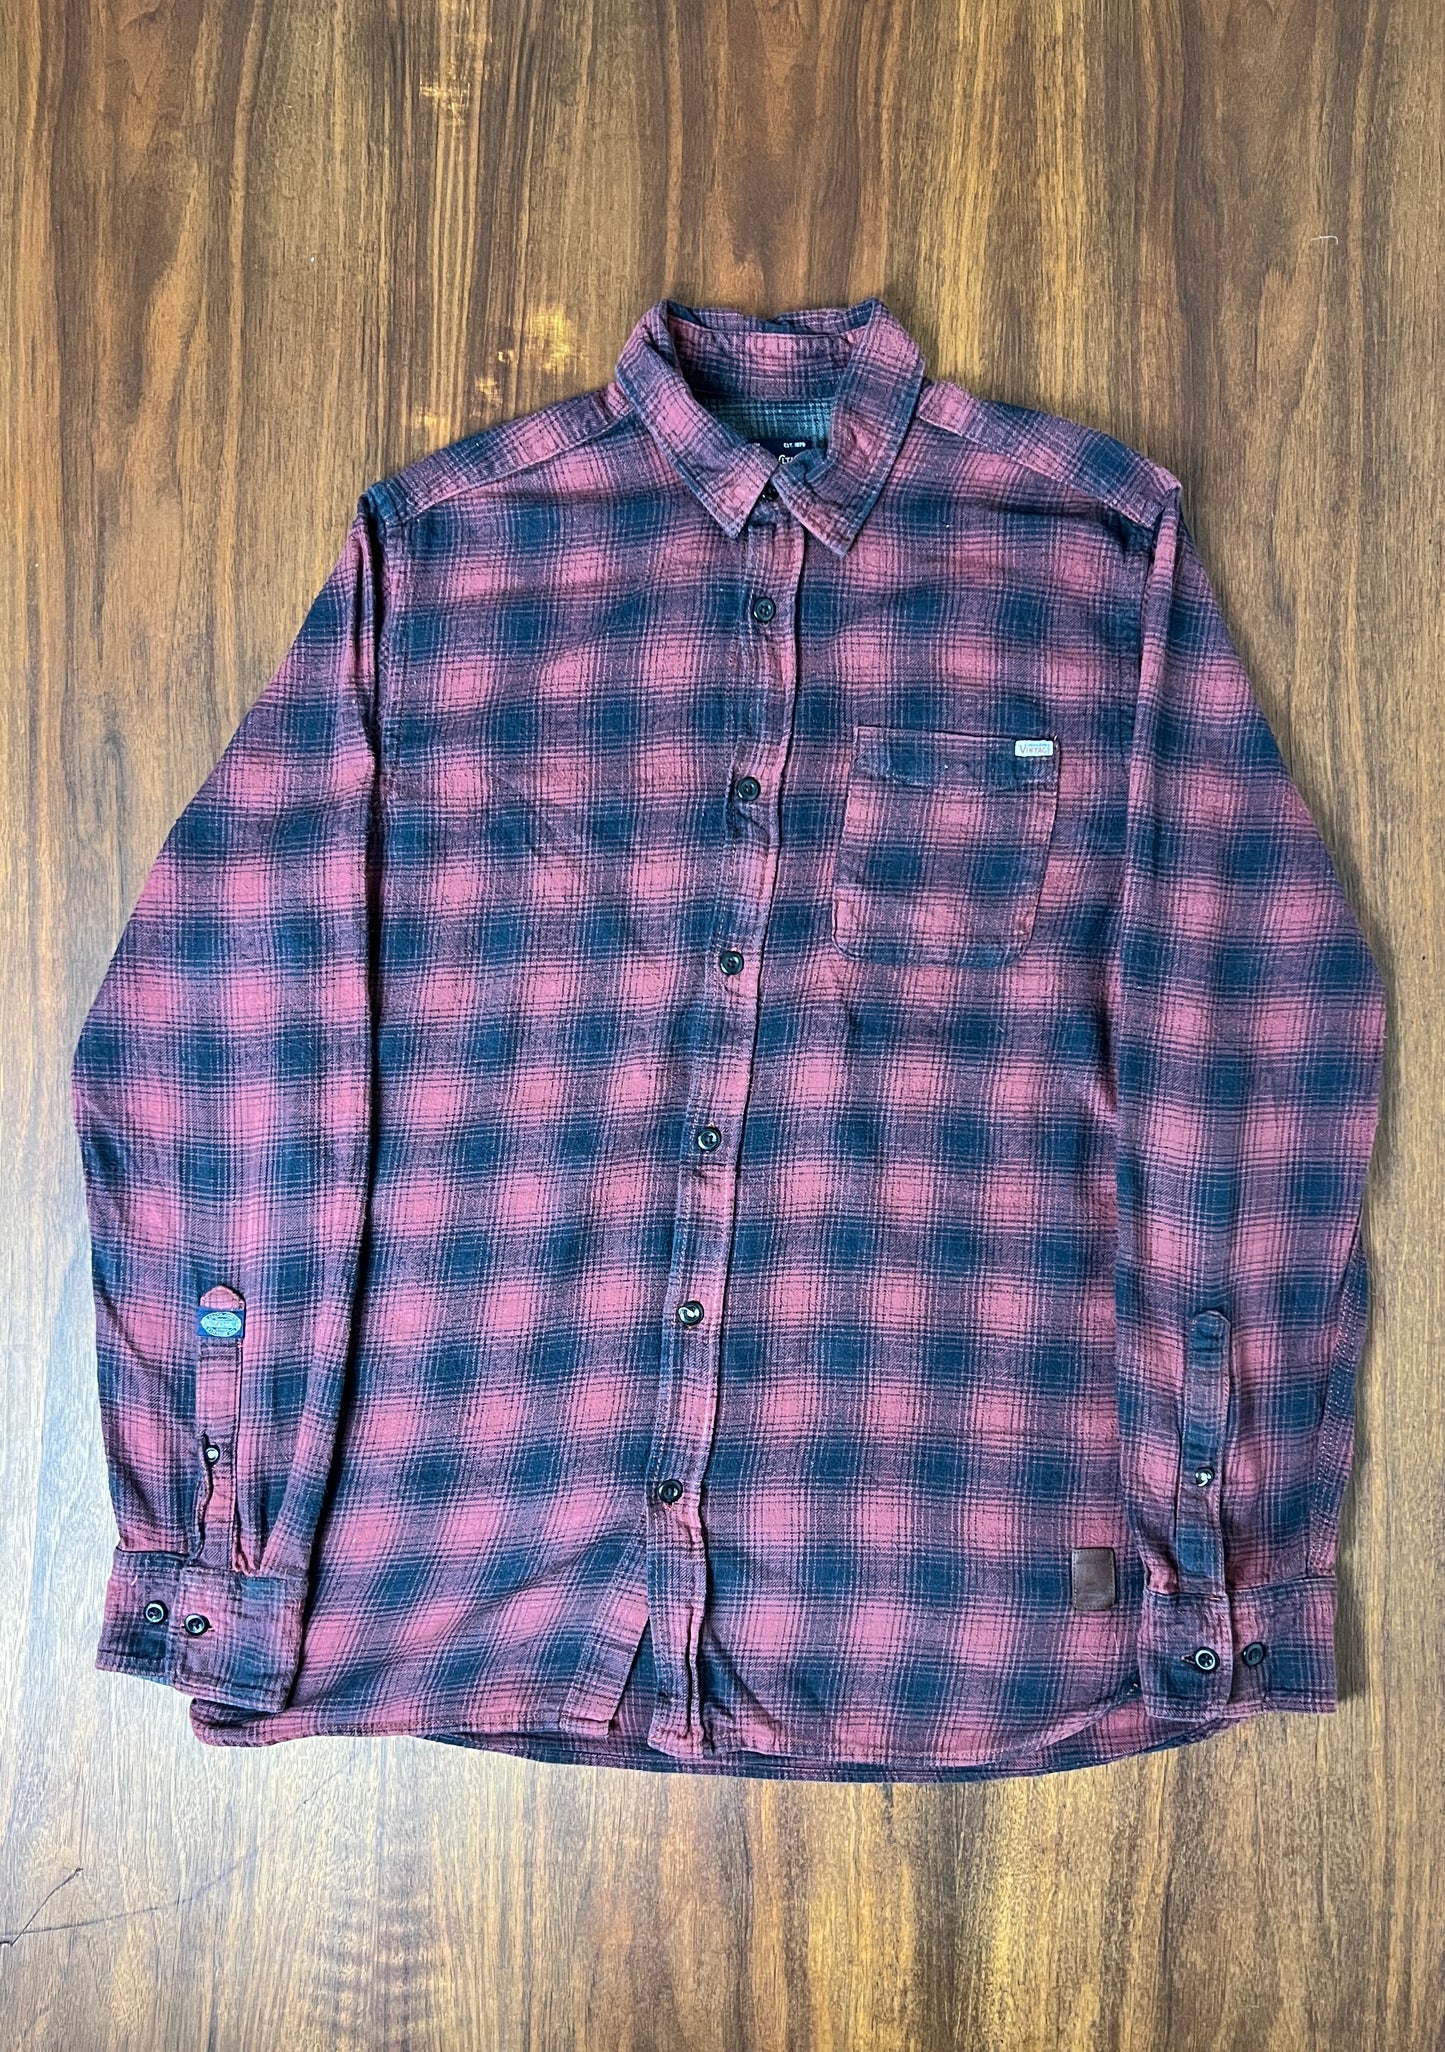 The Lumberjack Shirt